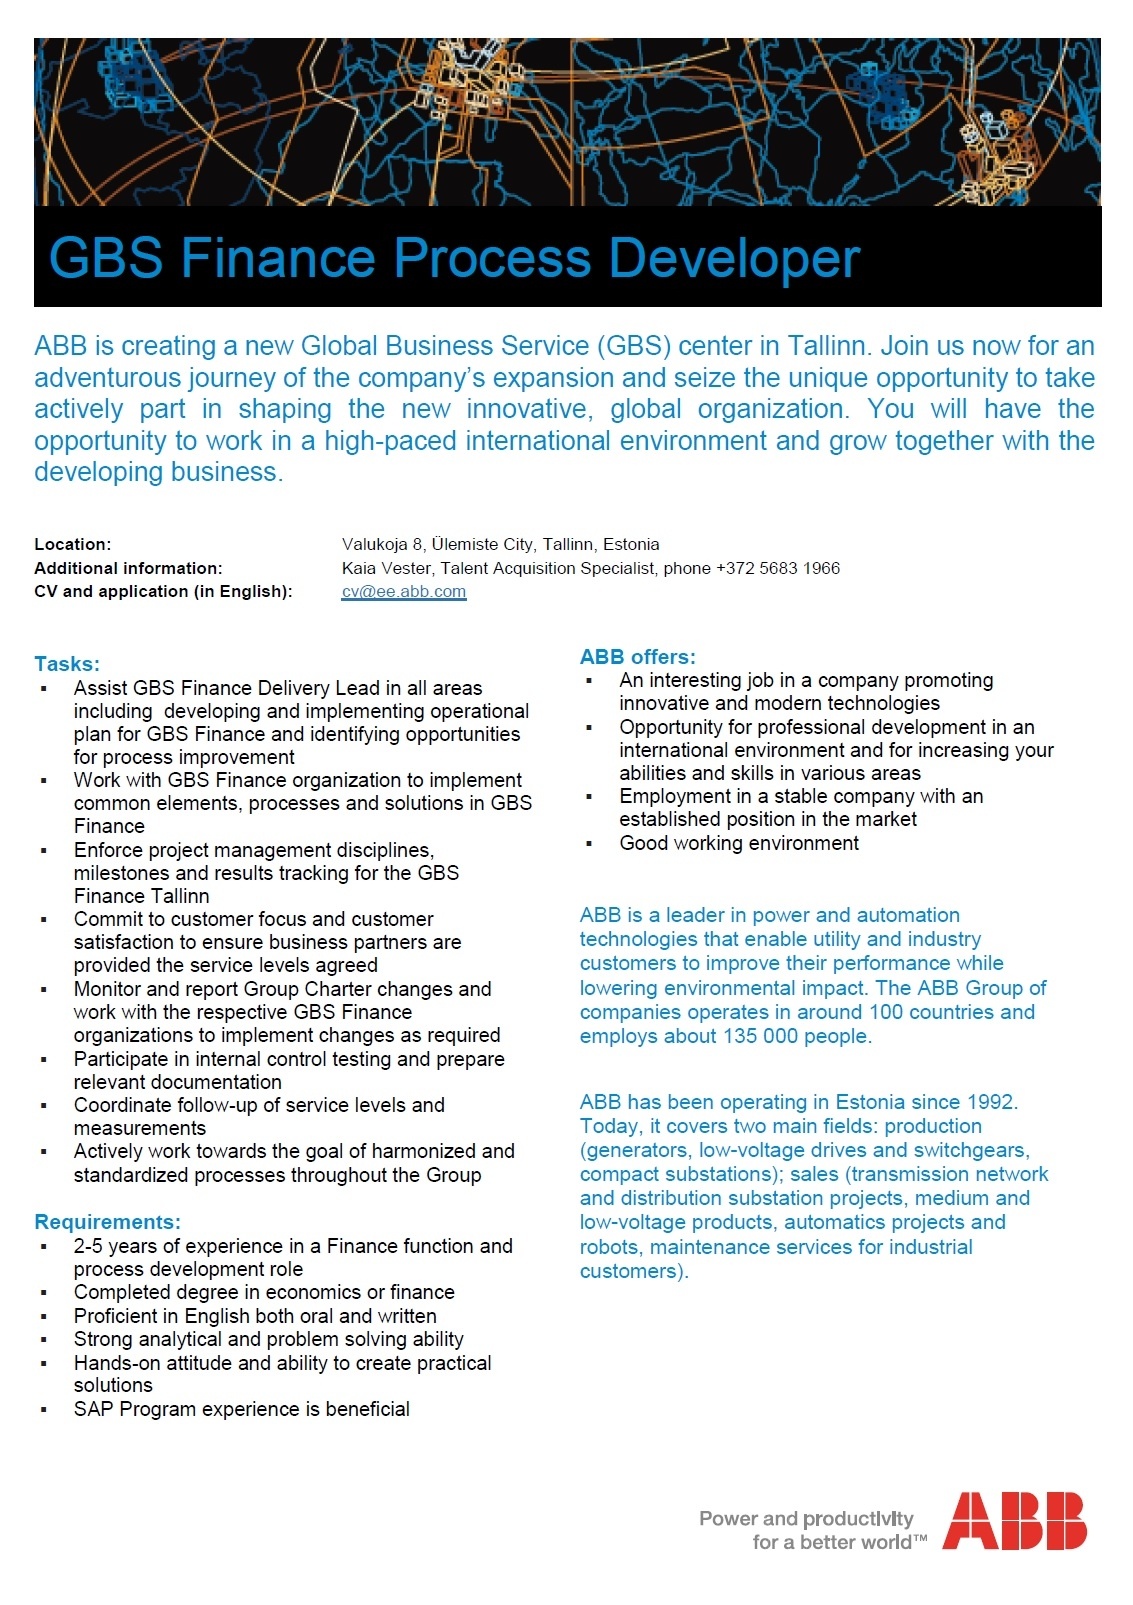 ABB AS GBS Finance Process Developer